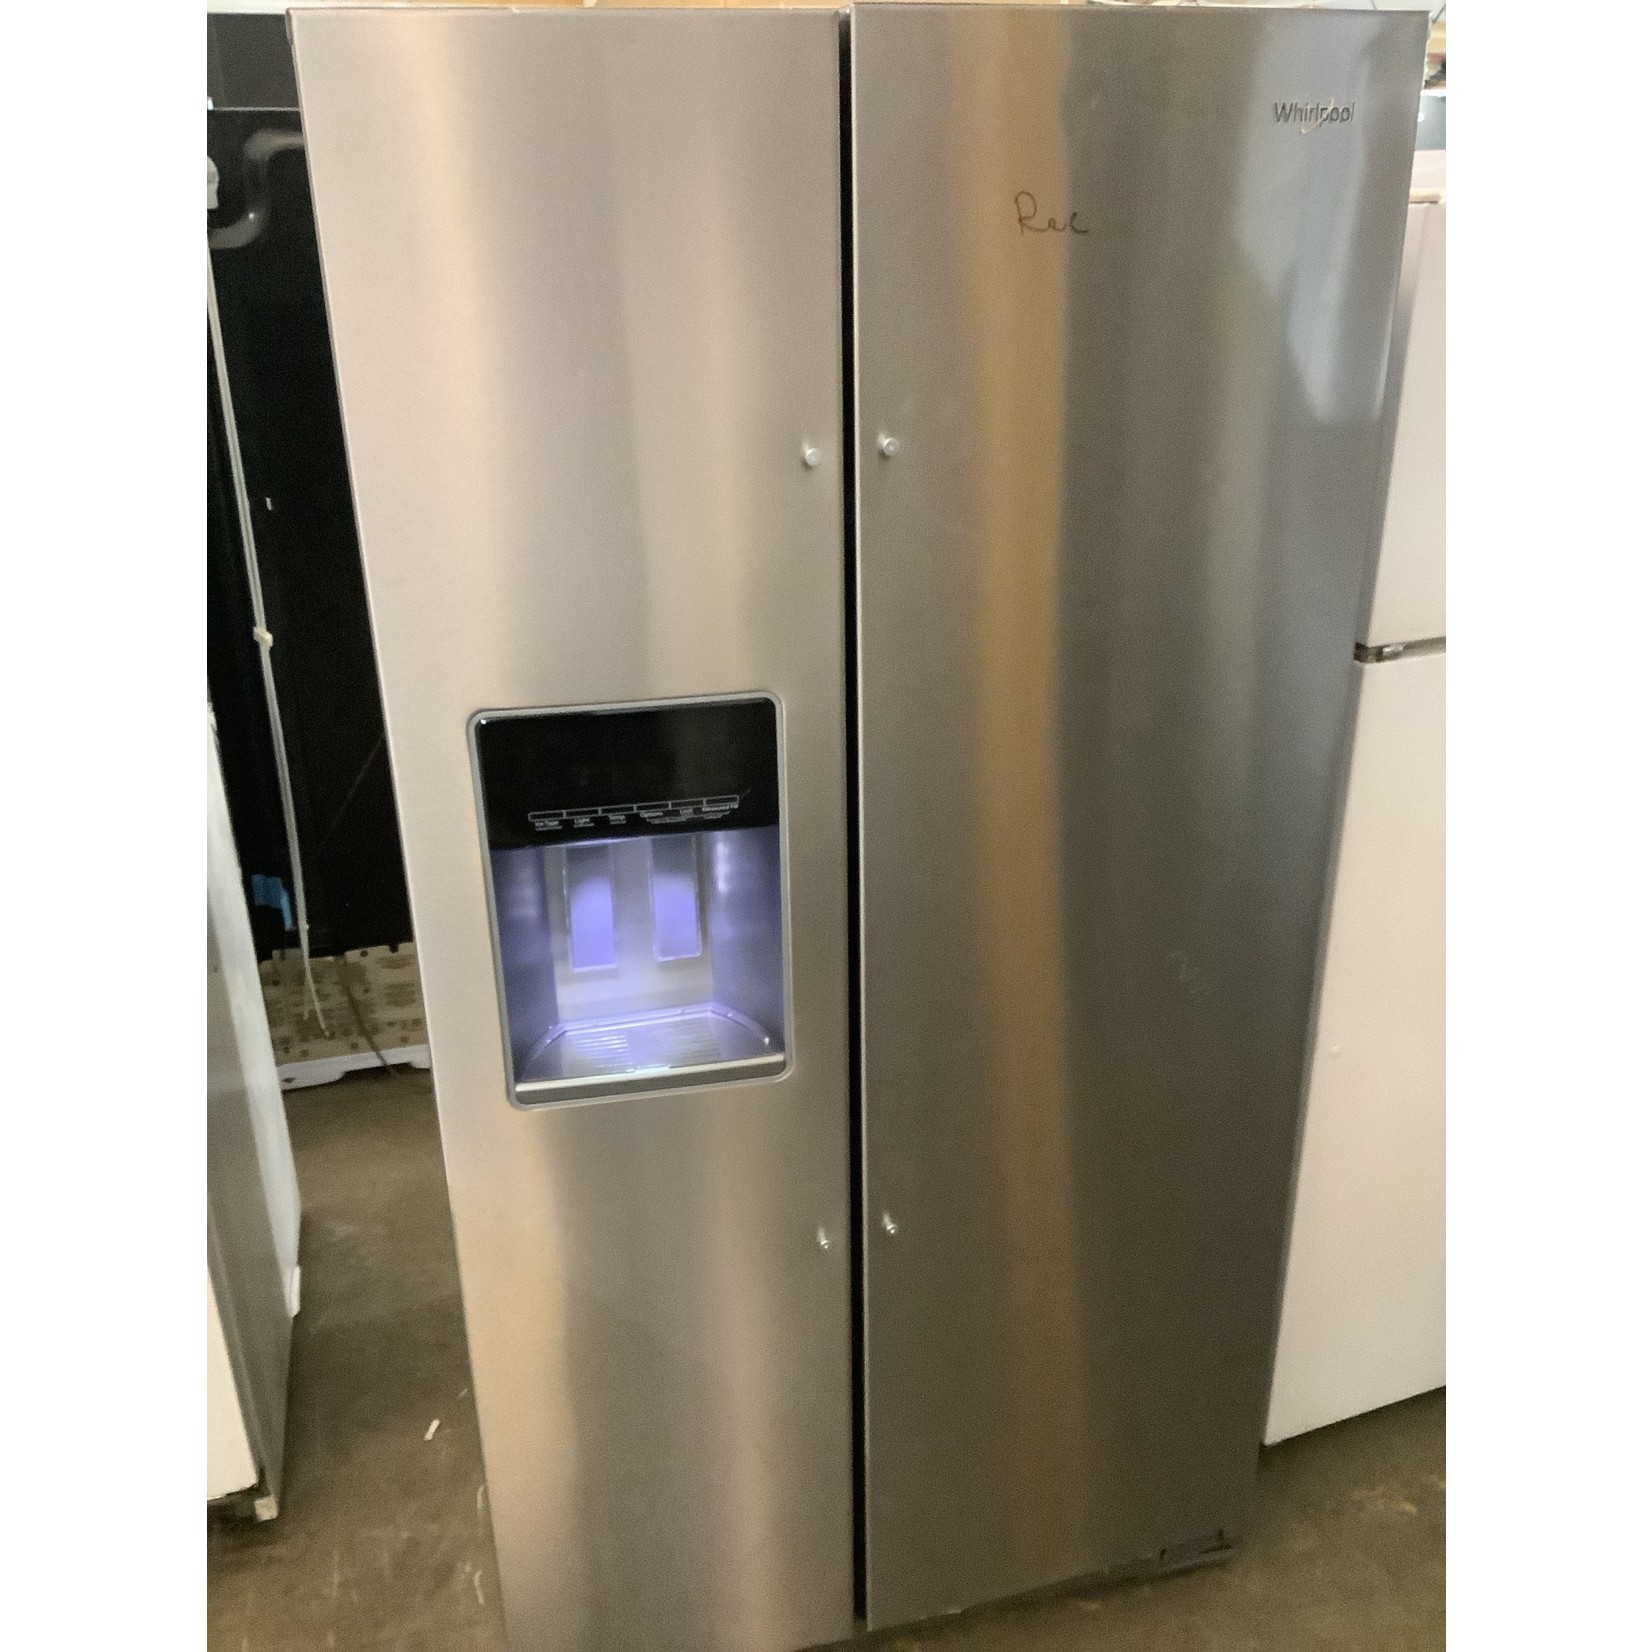 Whirlpool Sxs refrigerator